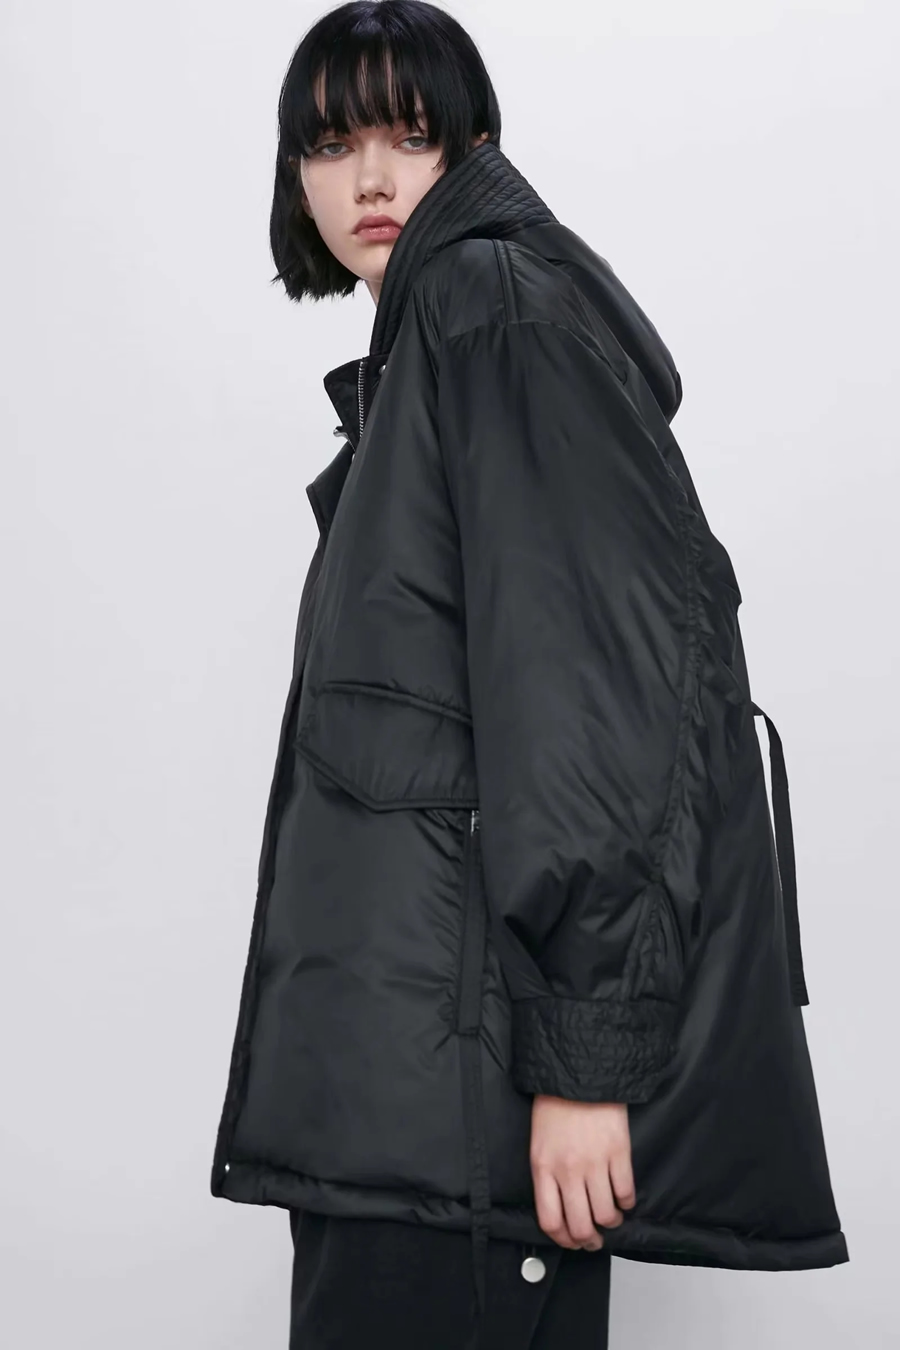 Fashion Black Riding A Zipper Worker Dress Thick Cotton Jacket,Coat-Jacket